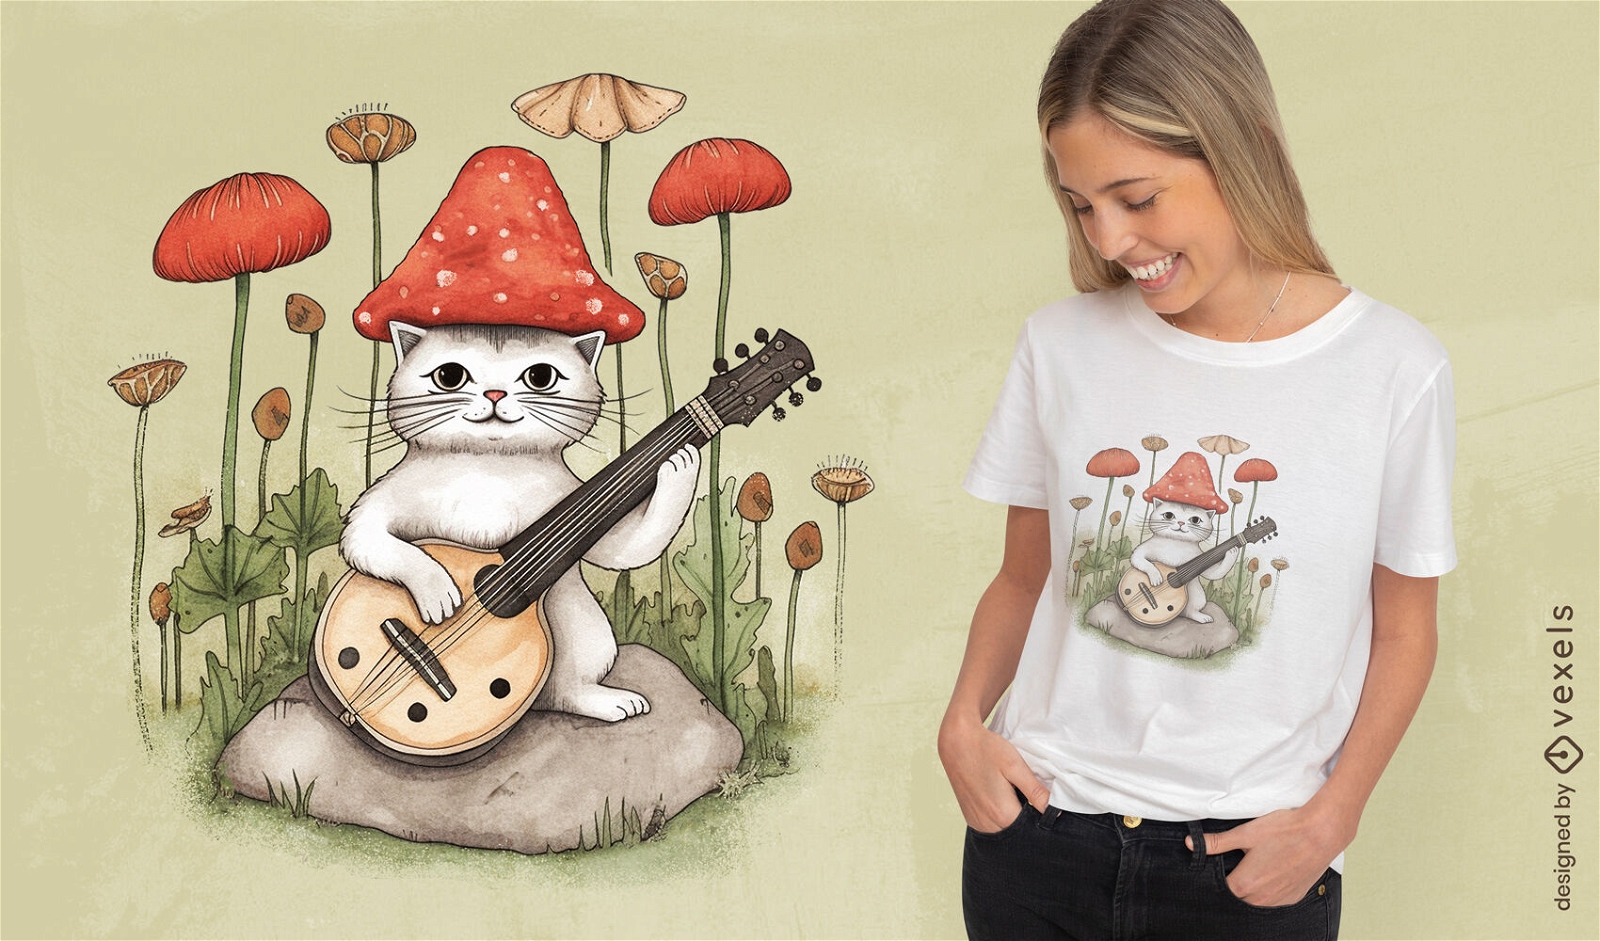 Cat playing banjo cattagecore t-shirt design